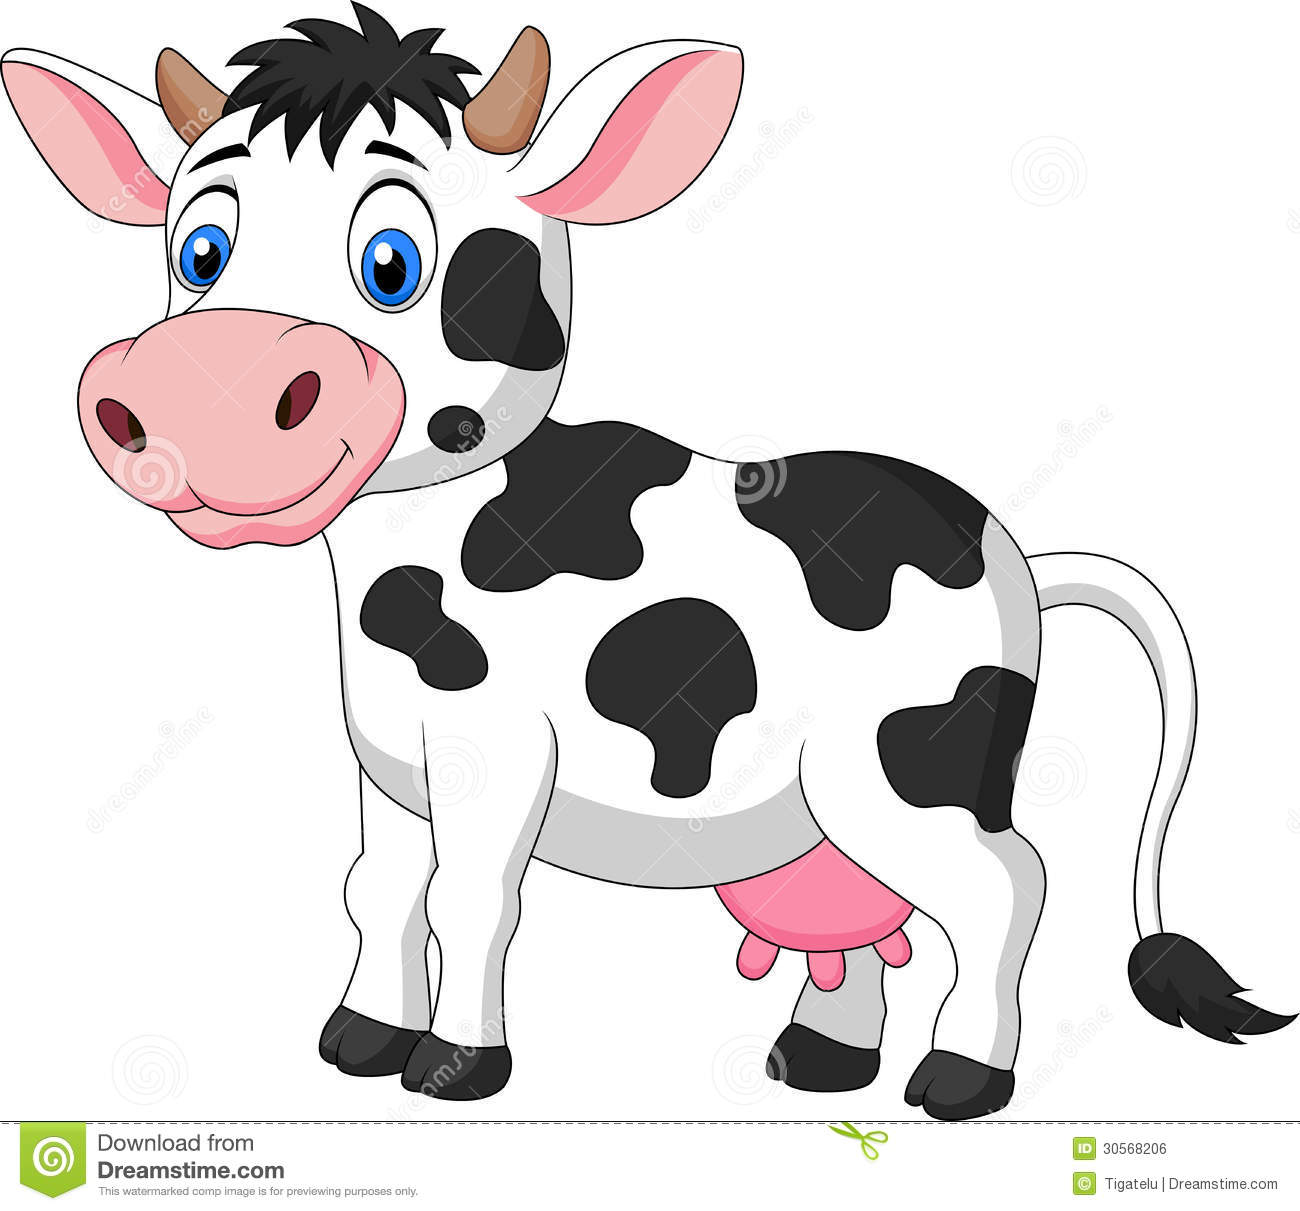 Cute Cow Cartoon Royalty Free Stock Image   Image  30568206